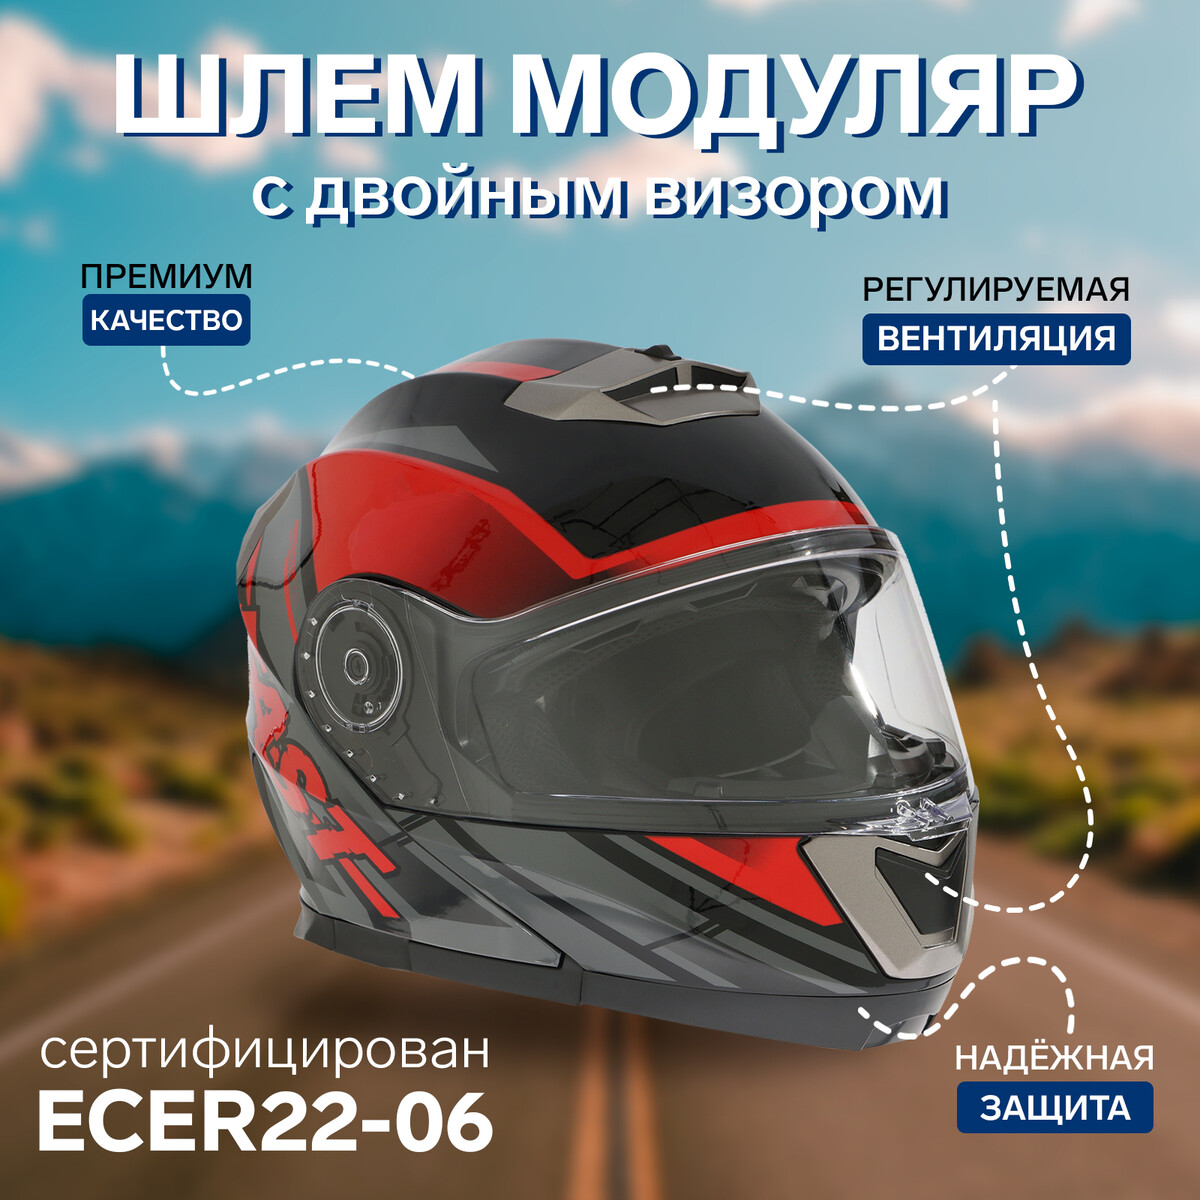 Шлем модуляр с двумя визорами, размер xxl (61), модель - bld-160e, черно-красный